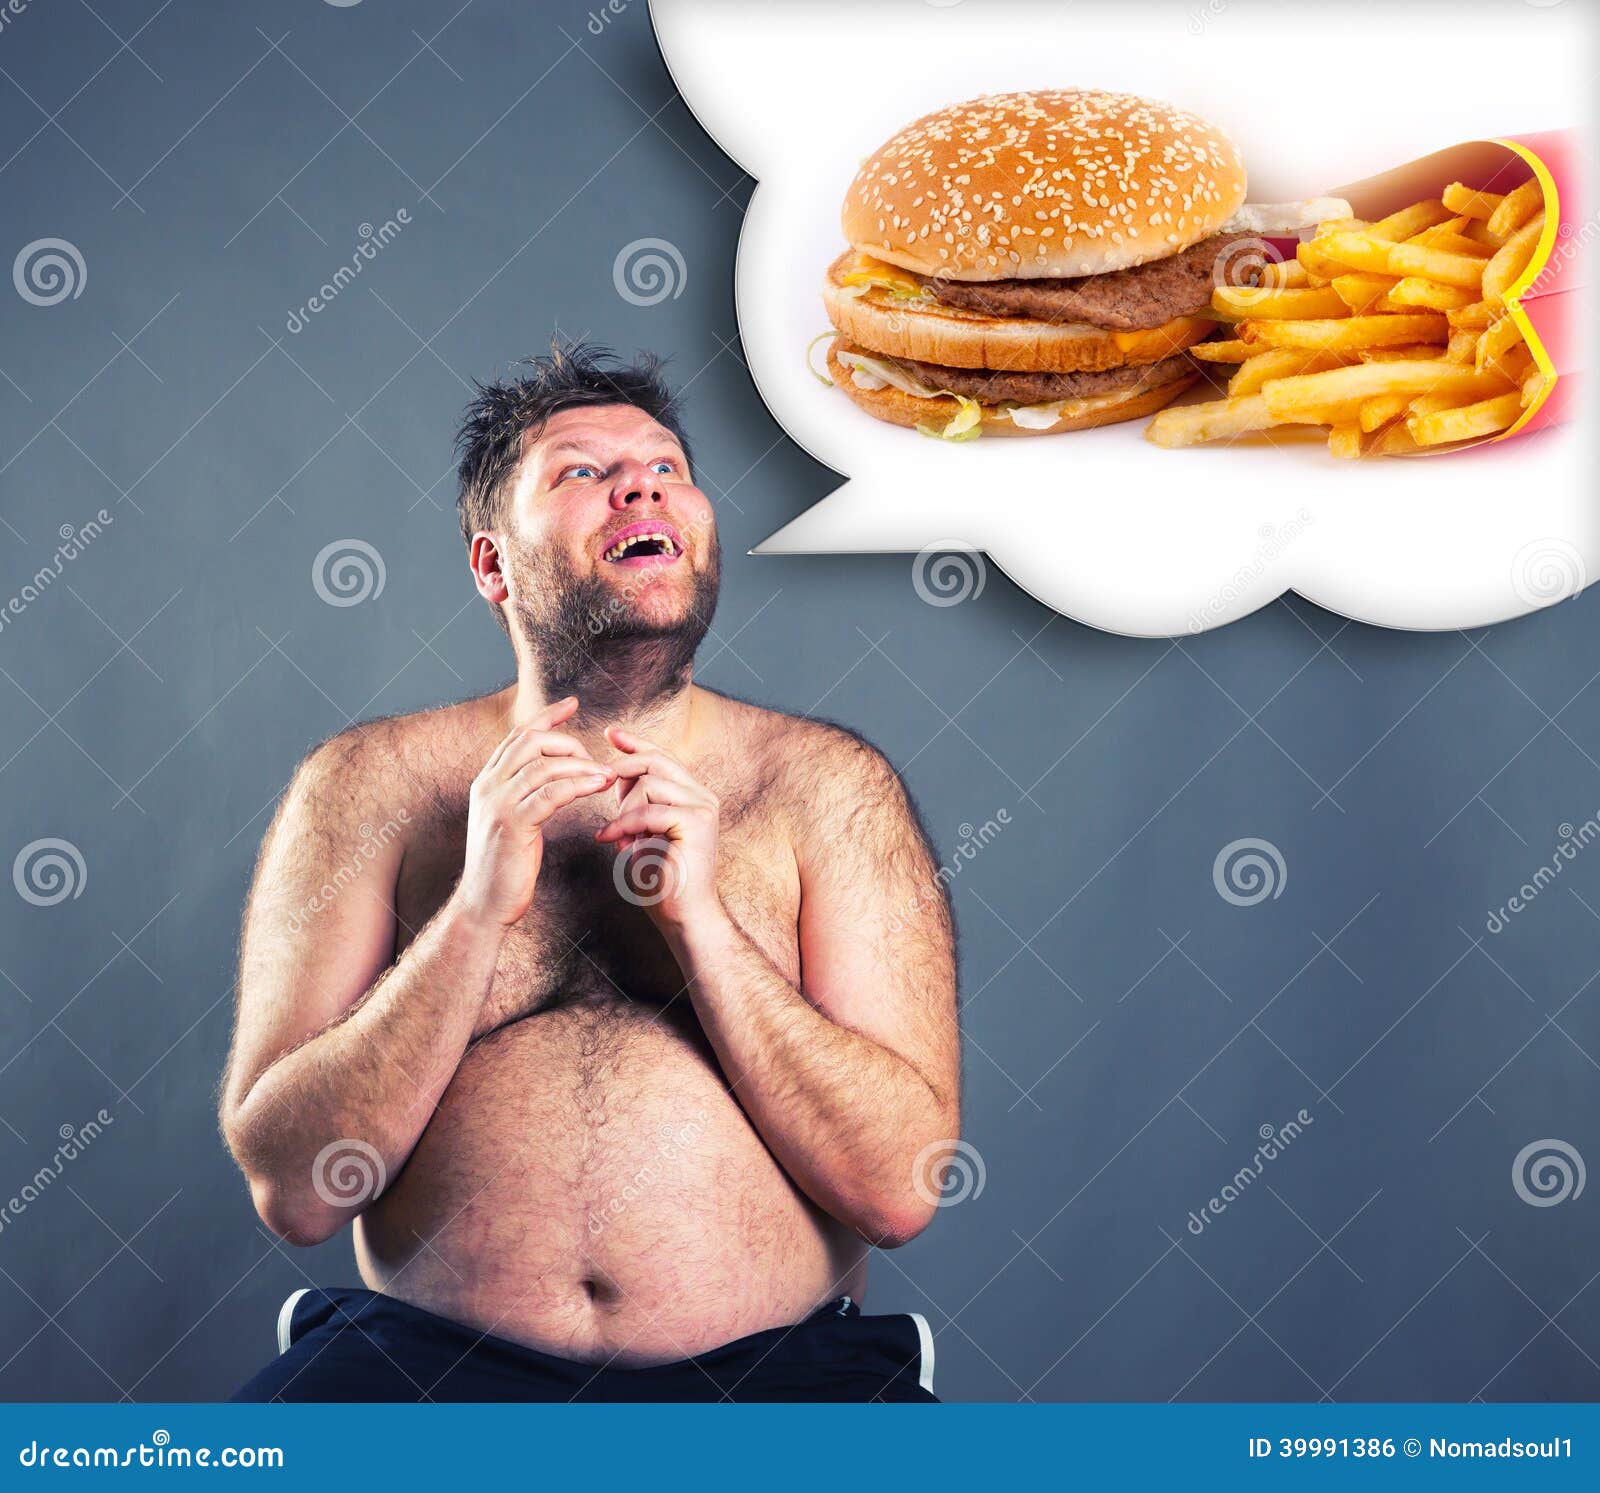 fat-funny-man-dreaming-hamburger-isolate